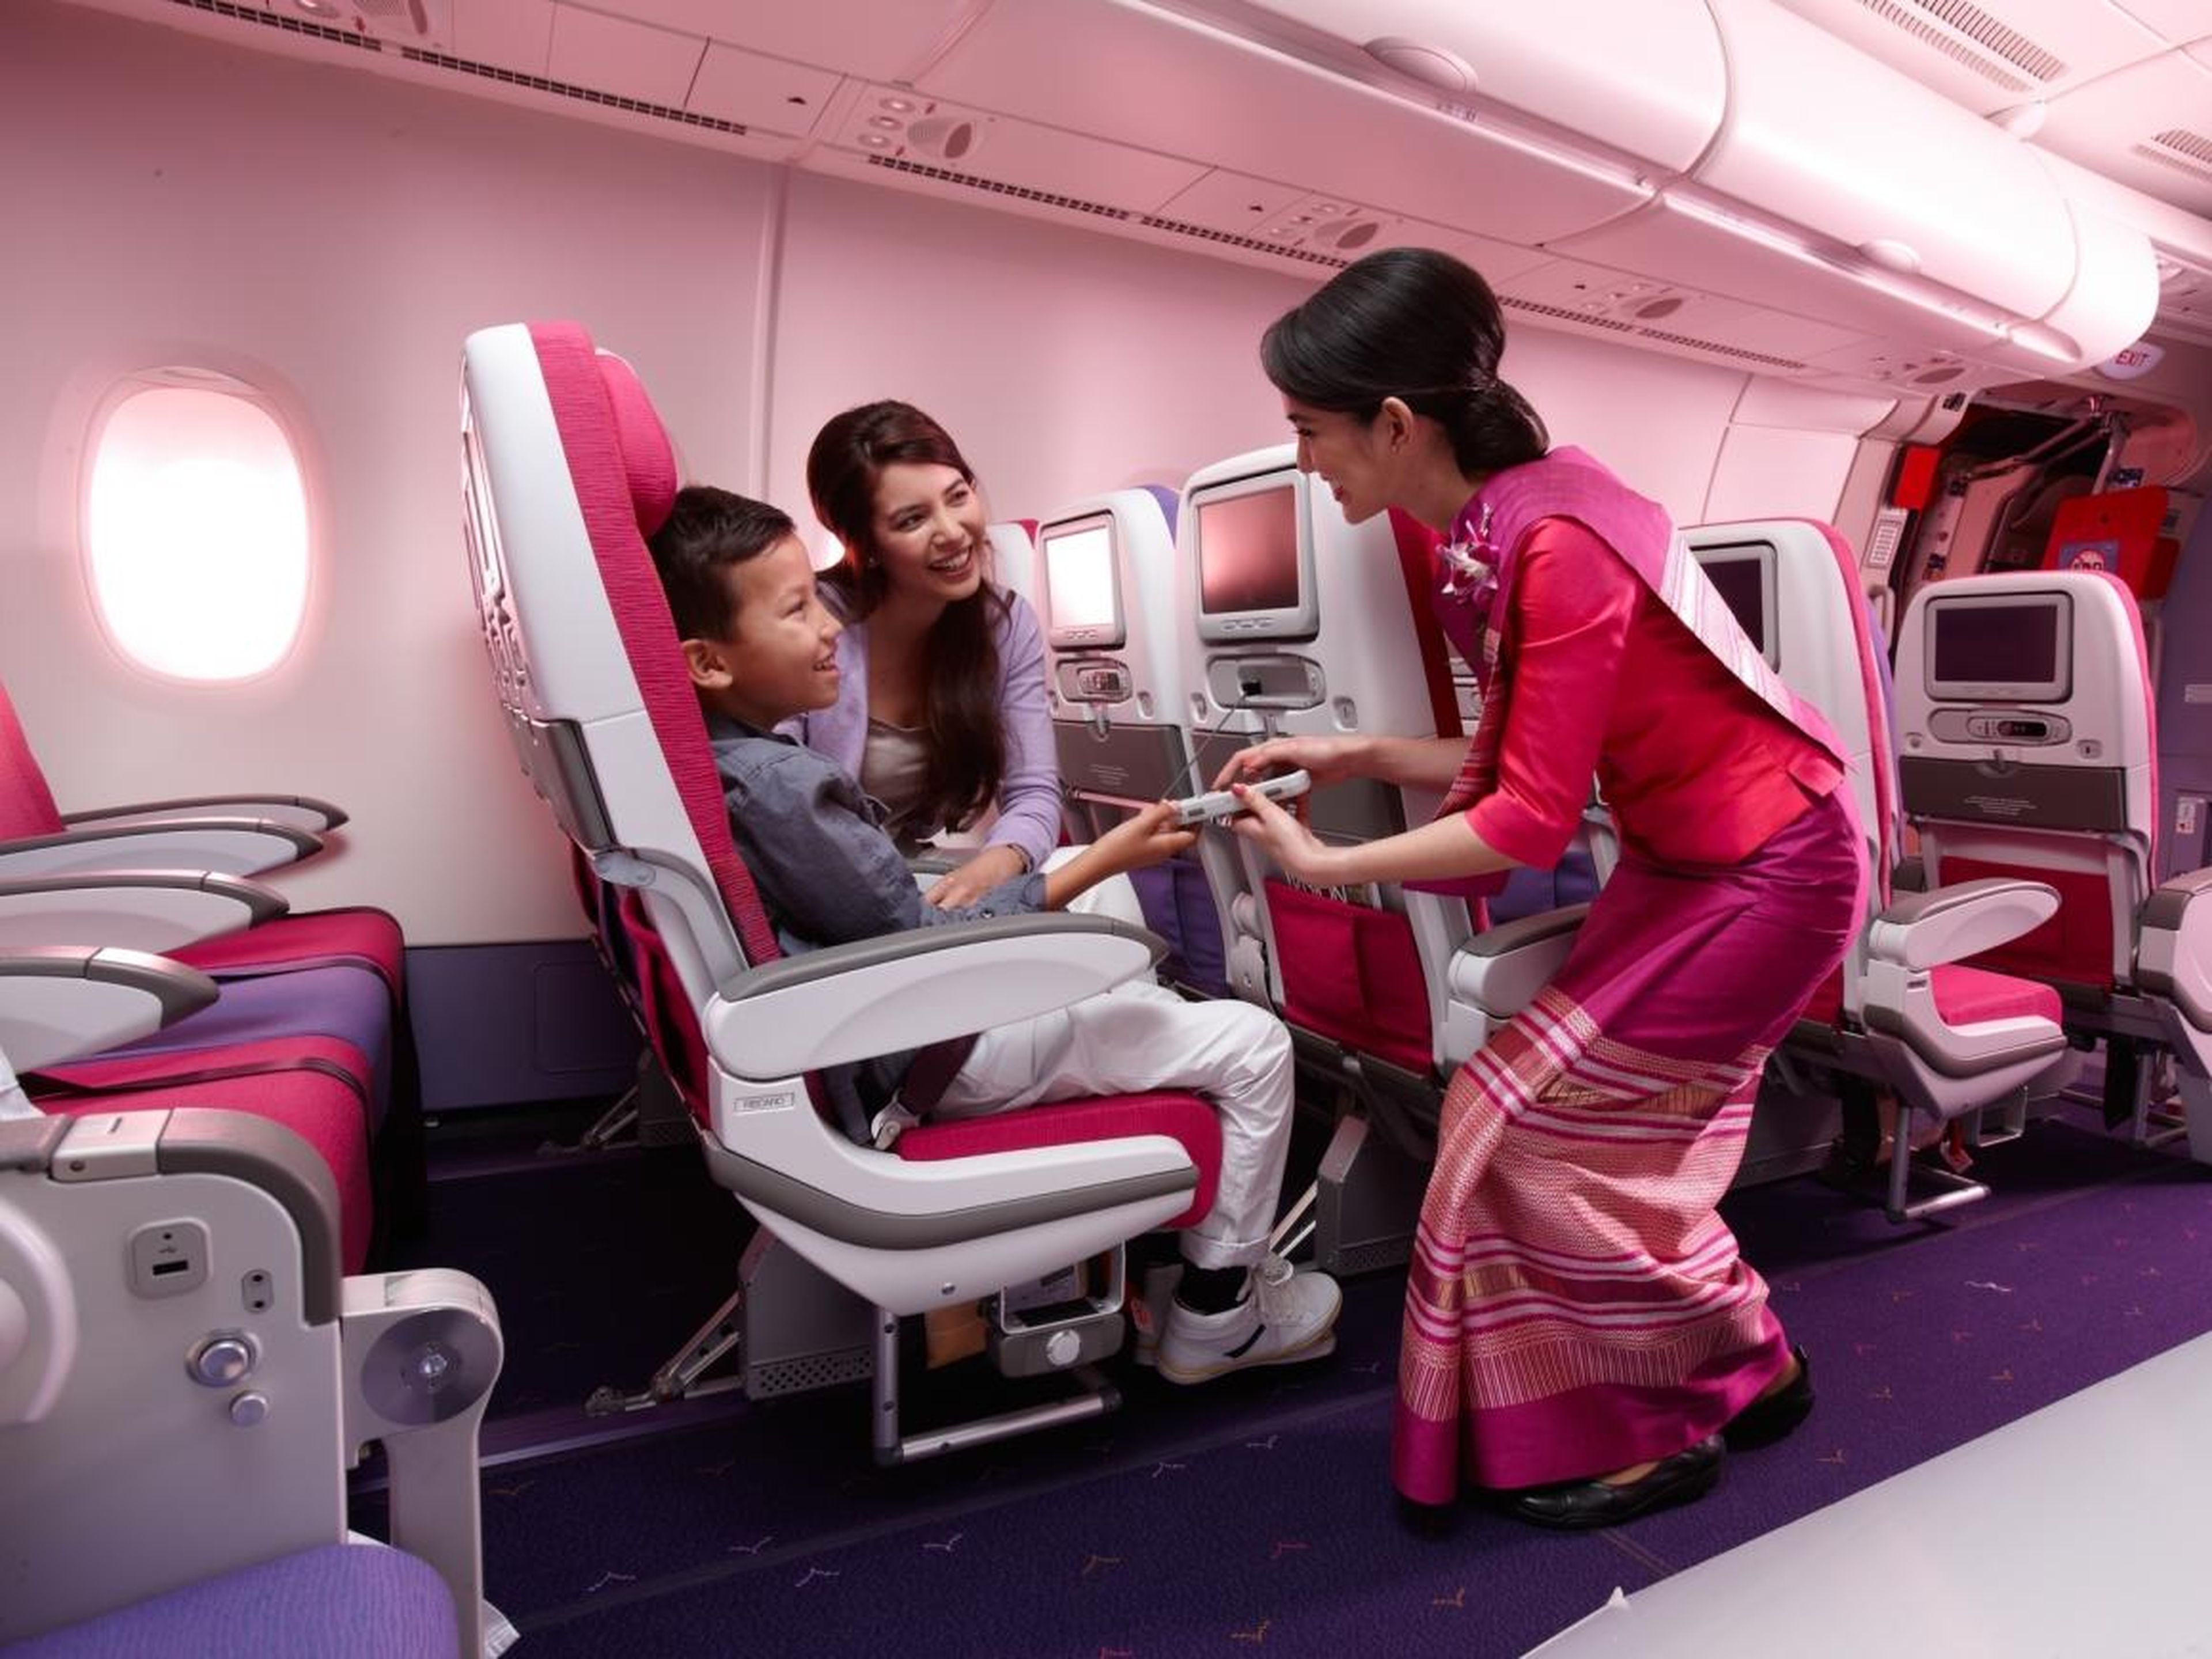 Thai Airways economy class cabin.